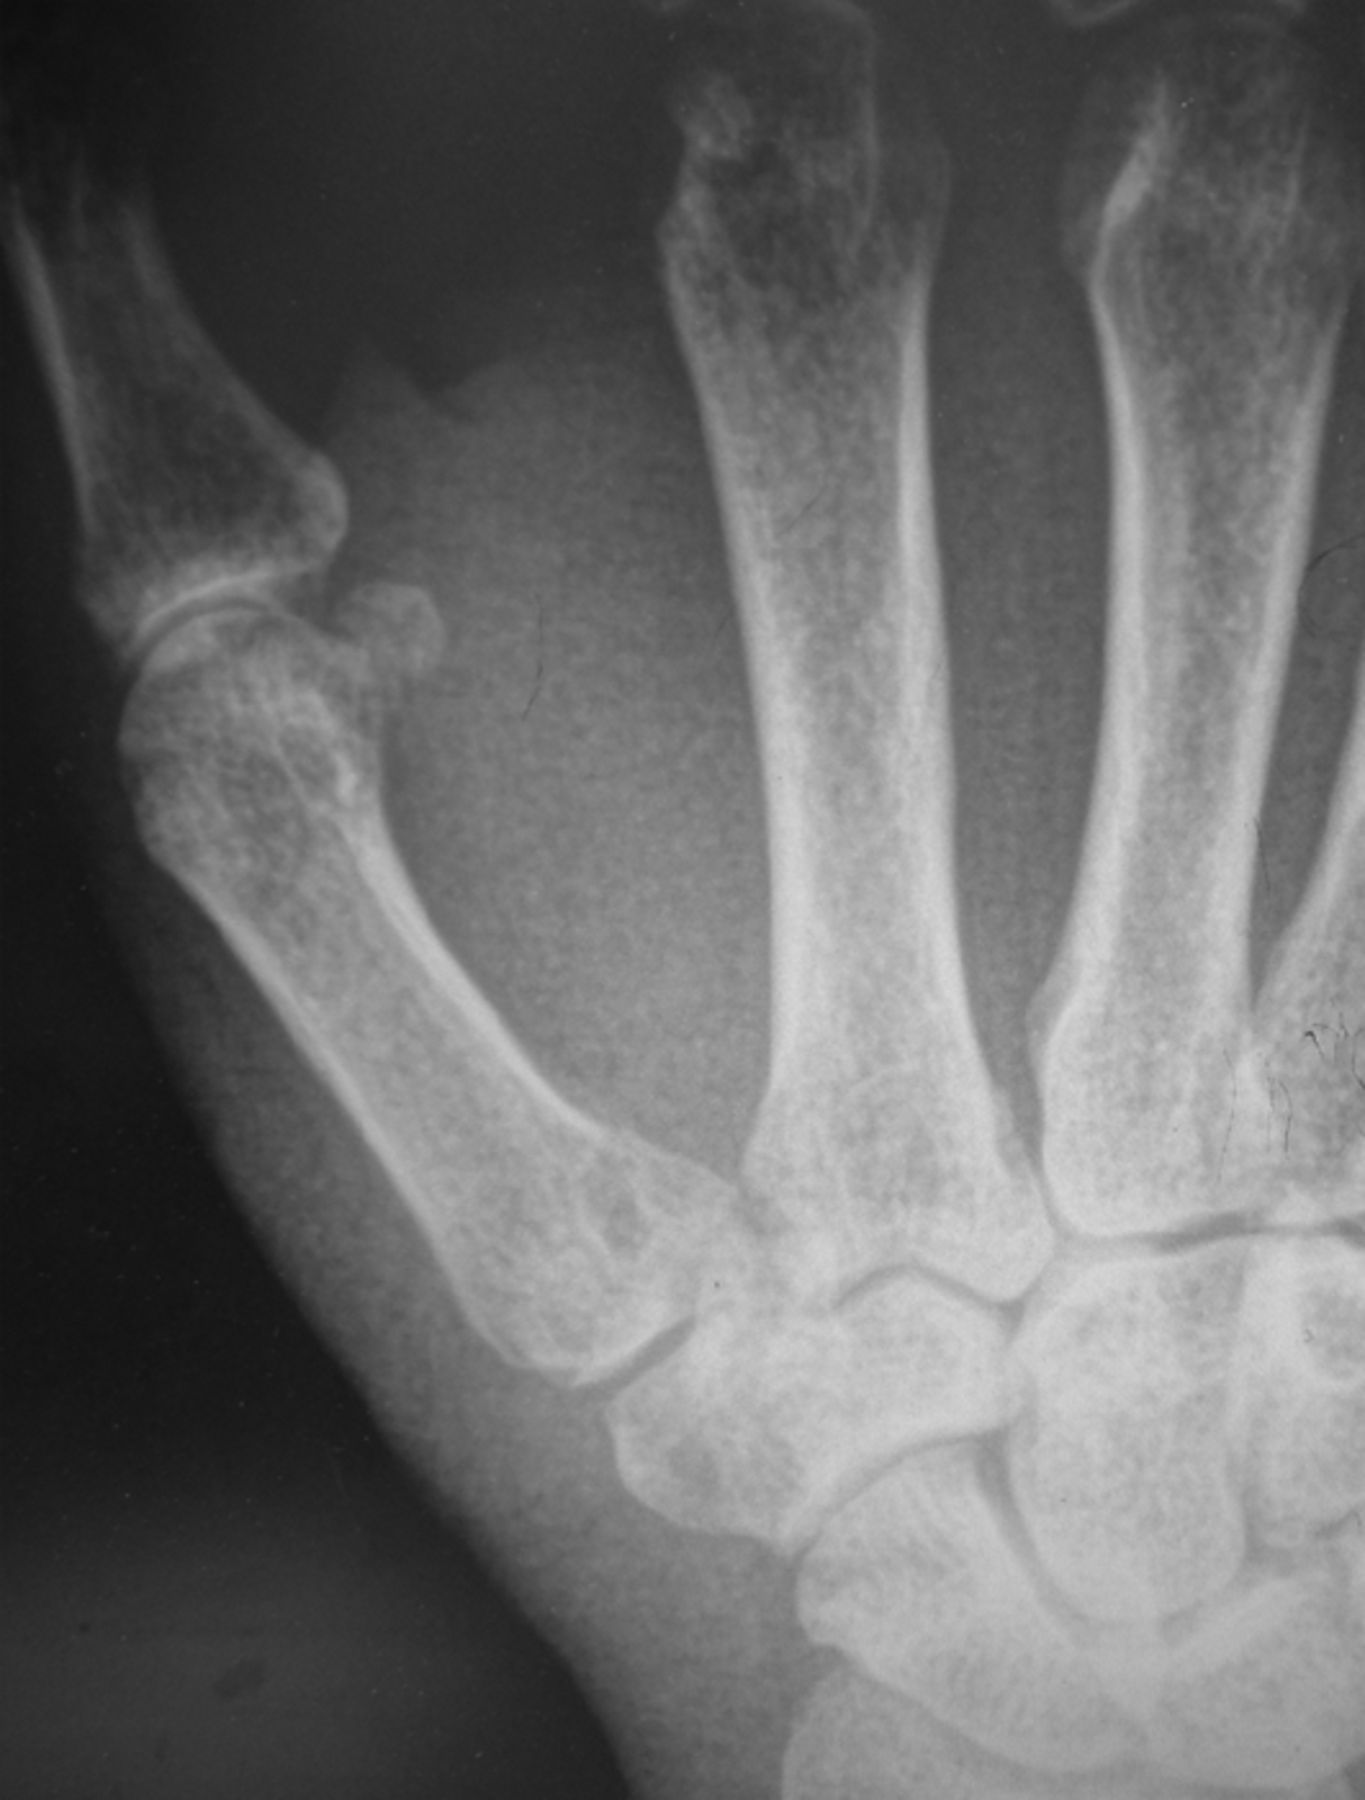 carpometacarpal joint dislocation